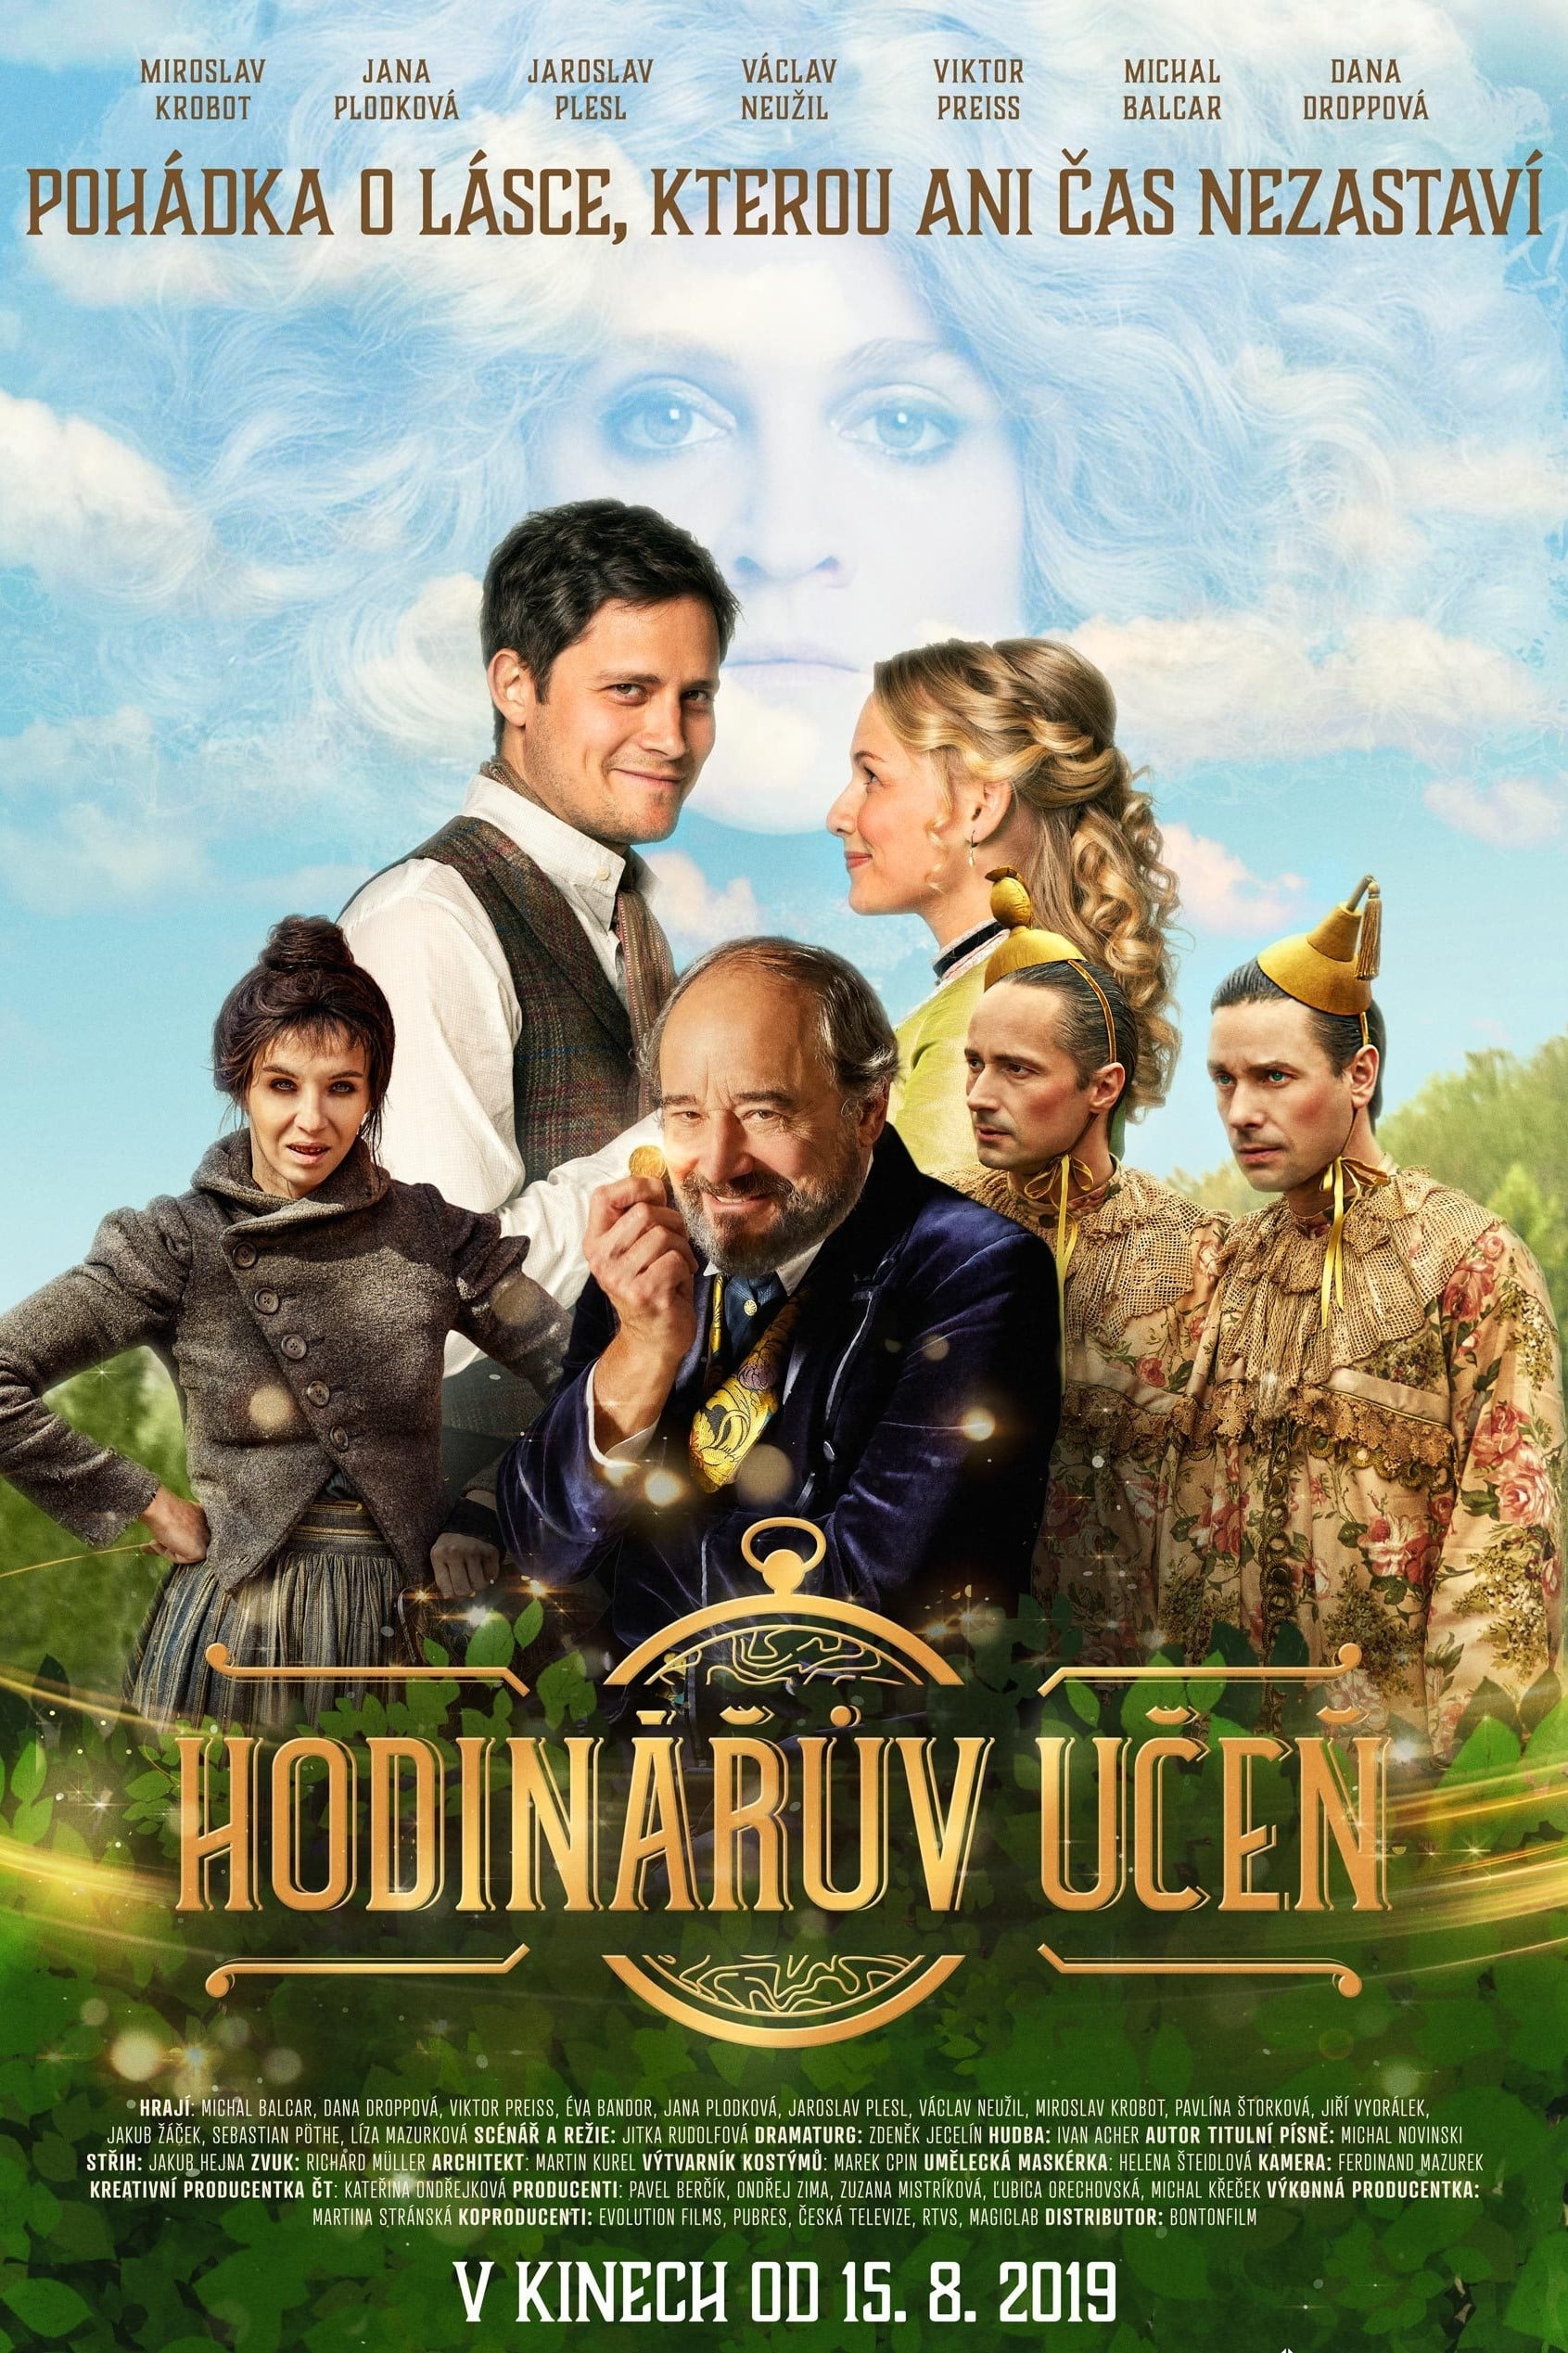 Mega Sized Movie Poster Image for Hodináruv ucen 